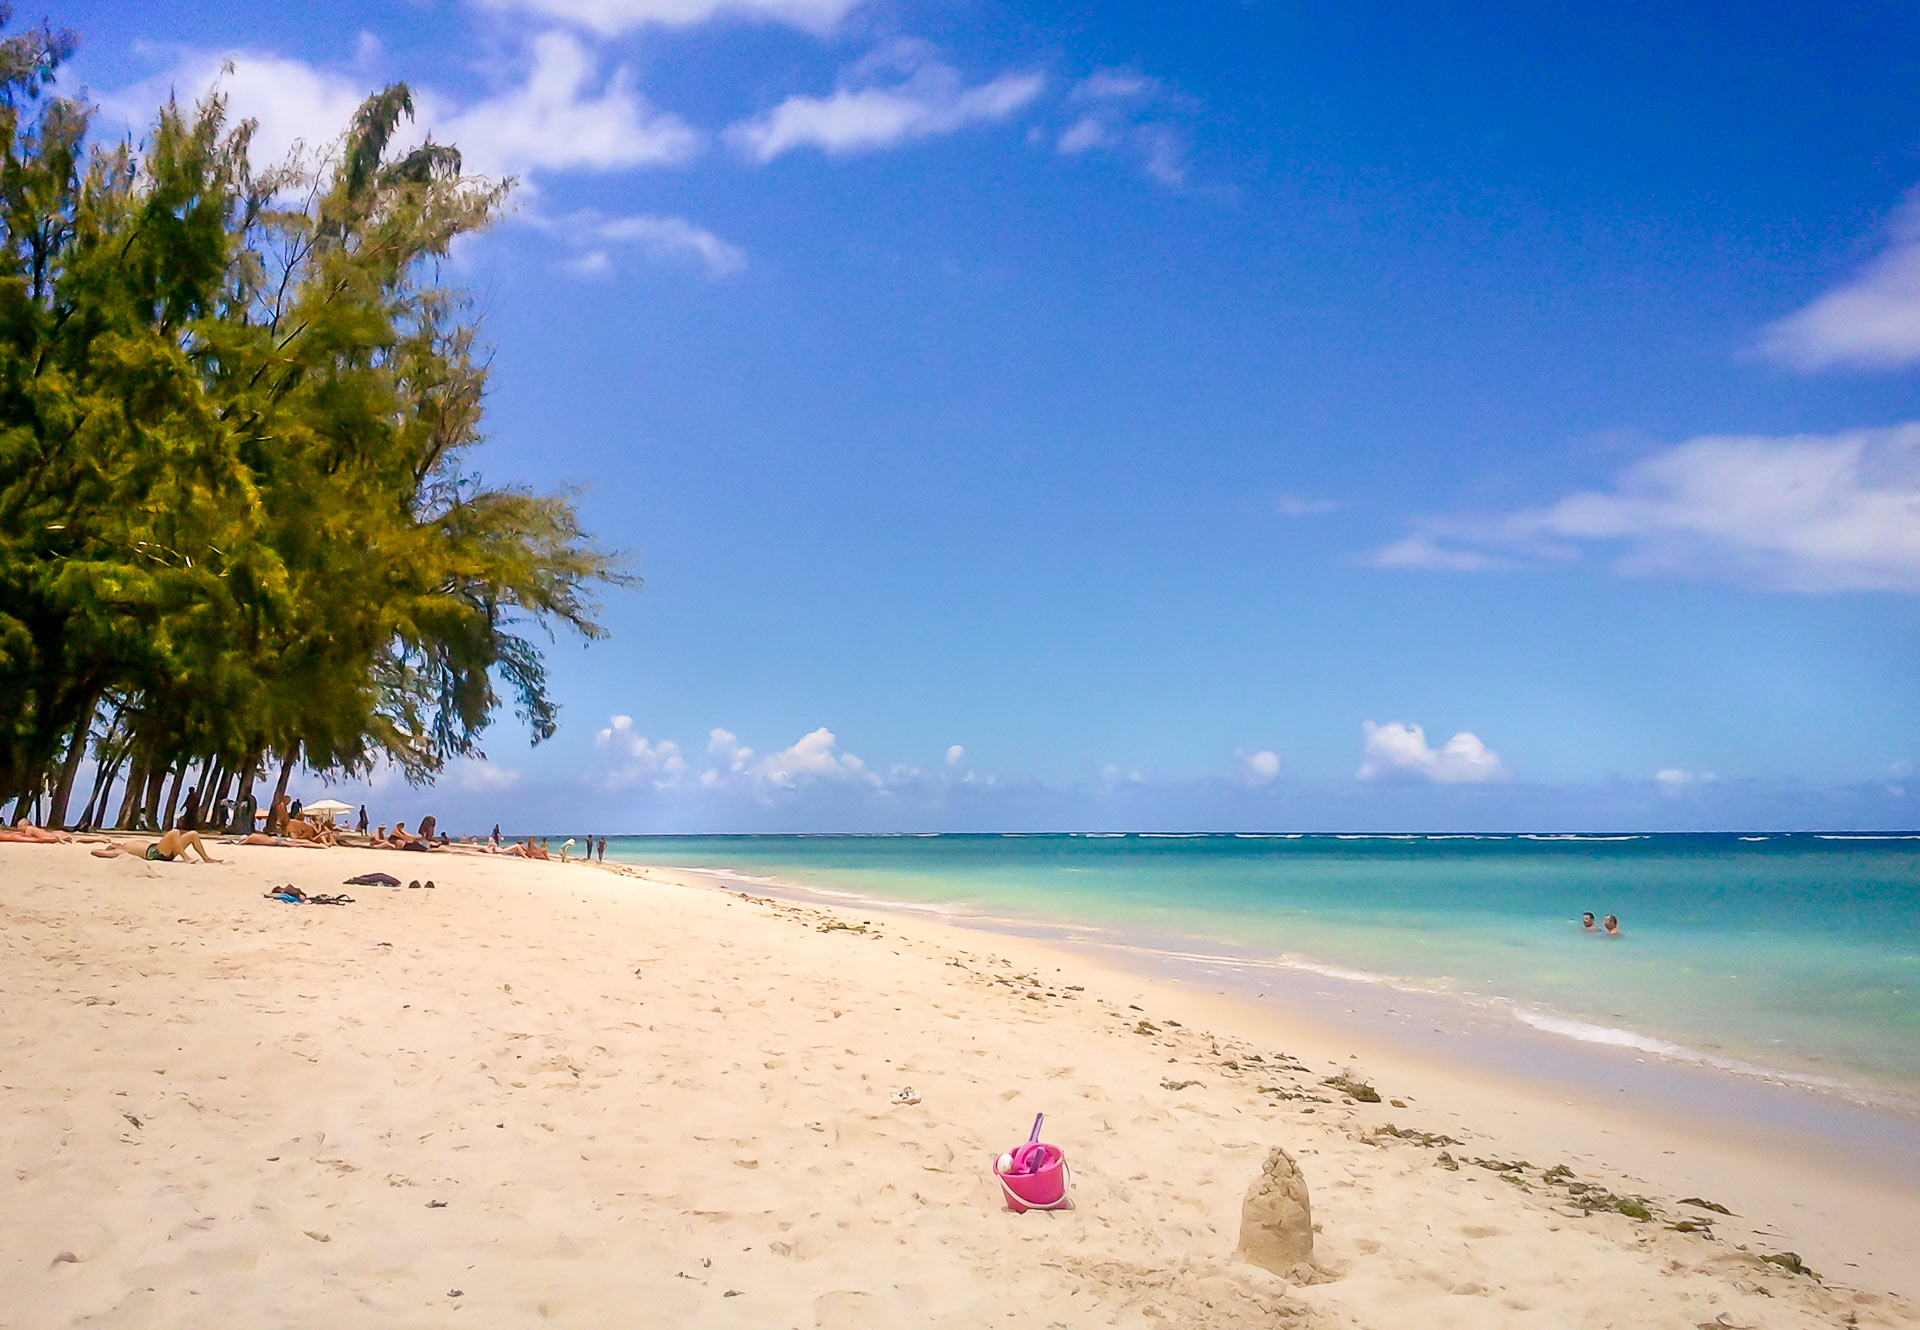 Flic Flac Beach - one week in Mauritius Itinerary